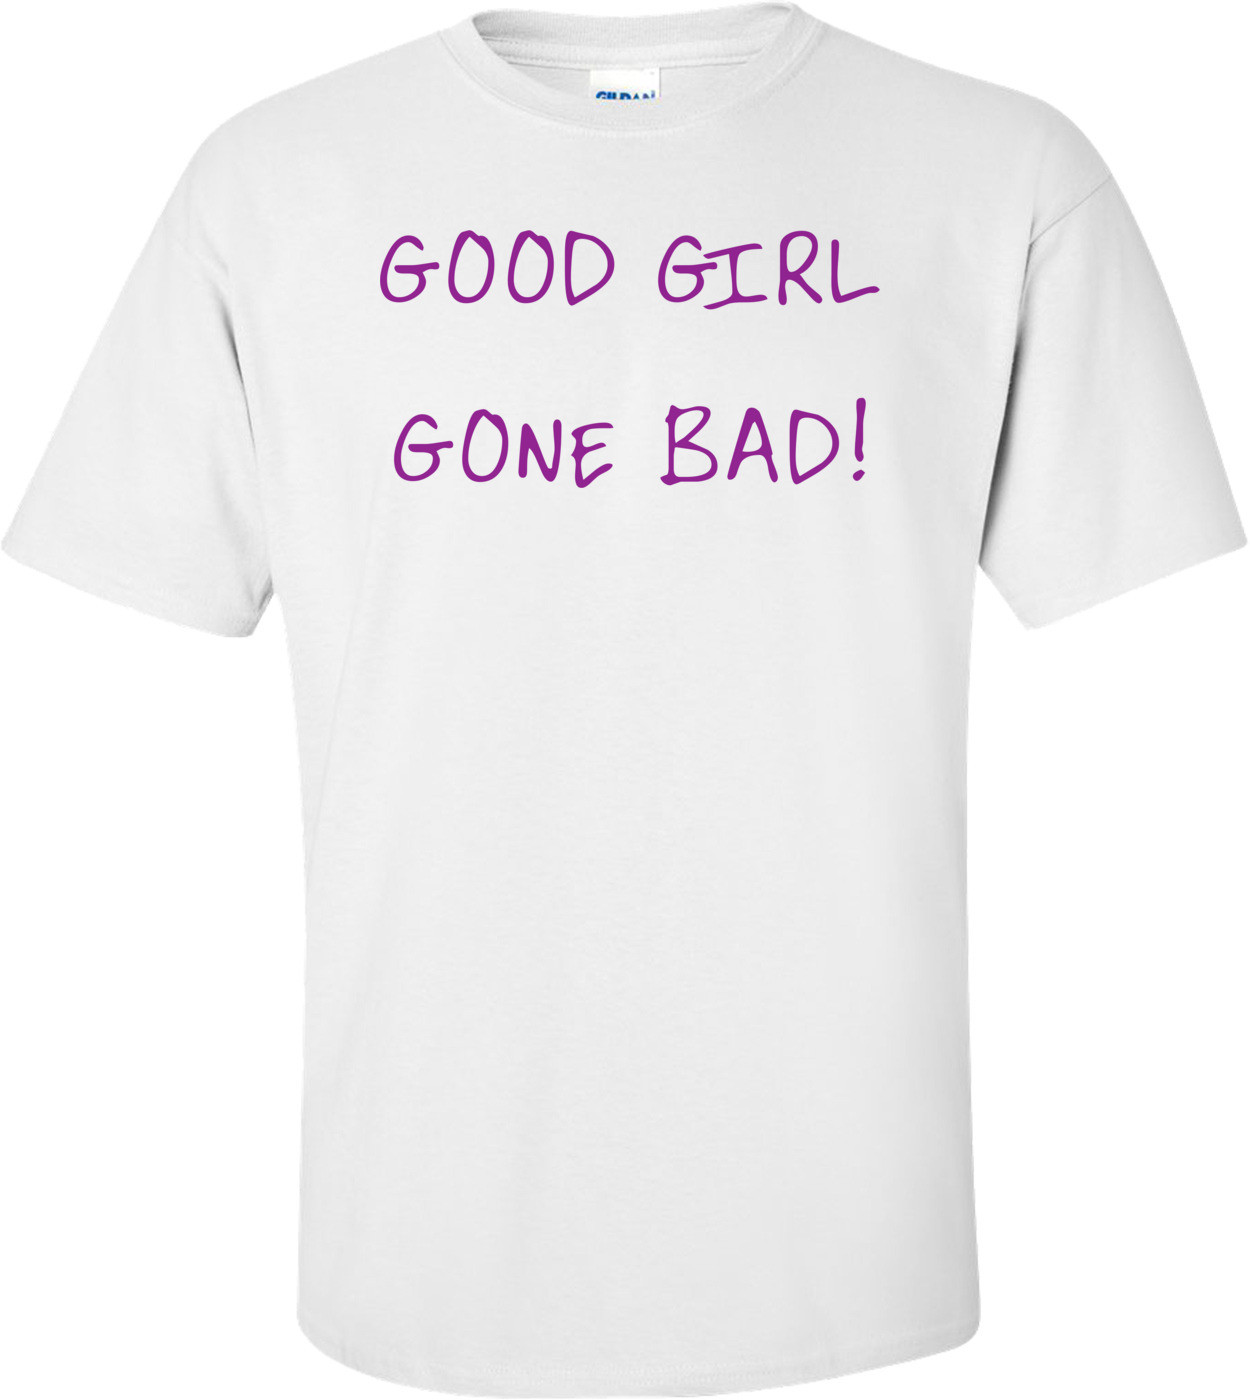 Good Girl Gone Bad!